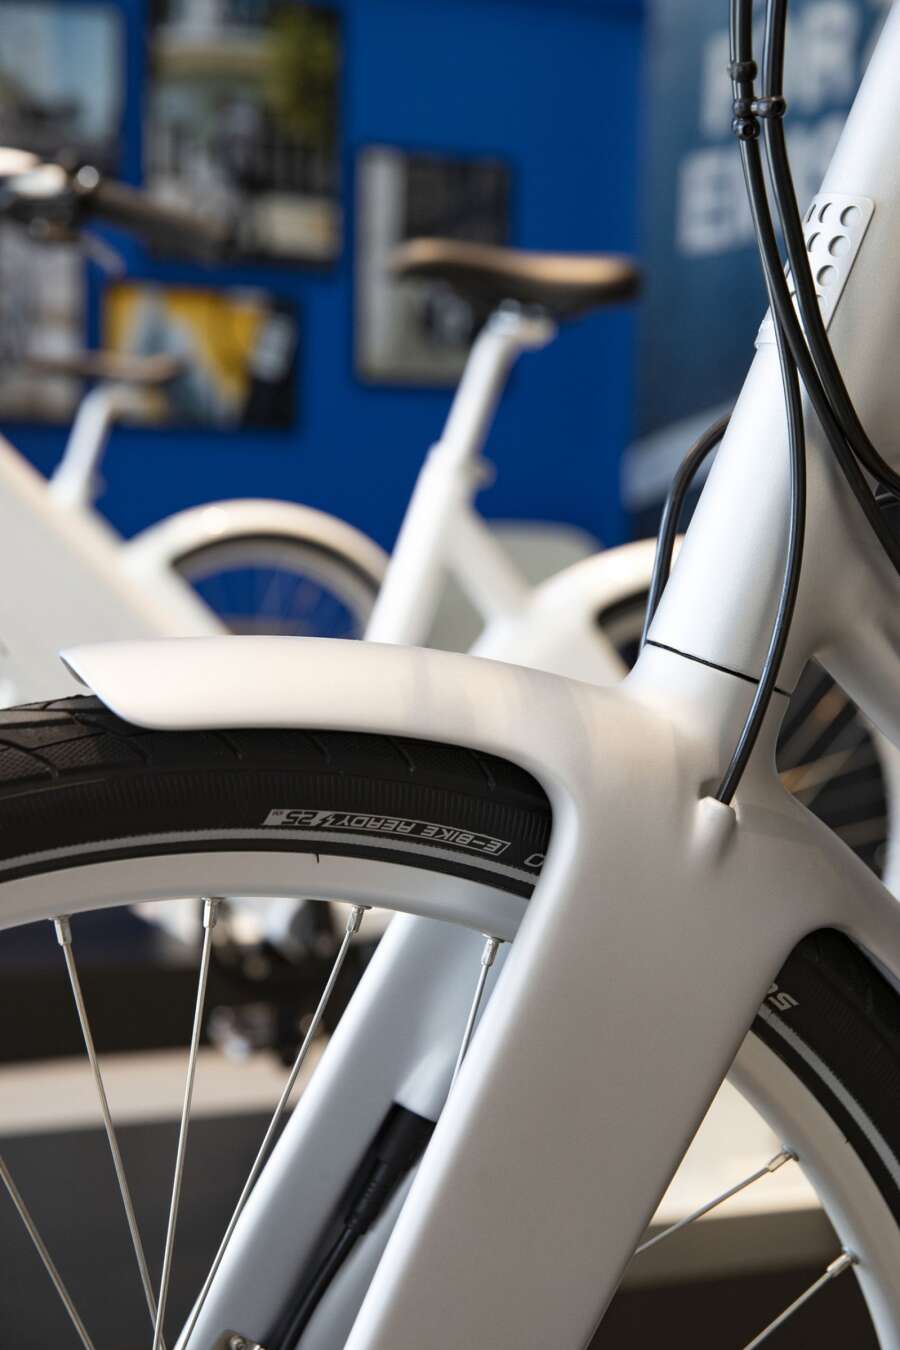 Har tabt 72 millioner kroner: Cykel-producent fra Silkeborg er | Midtjyllands Avis